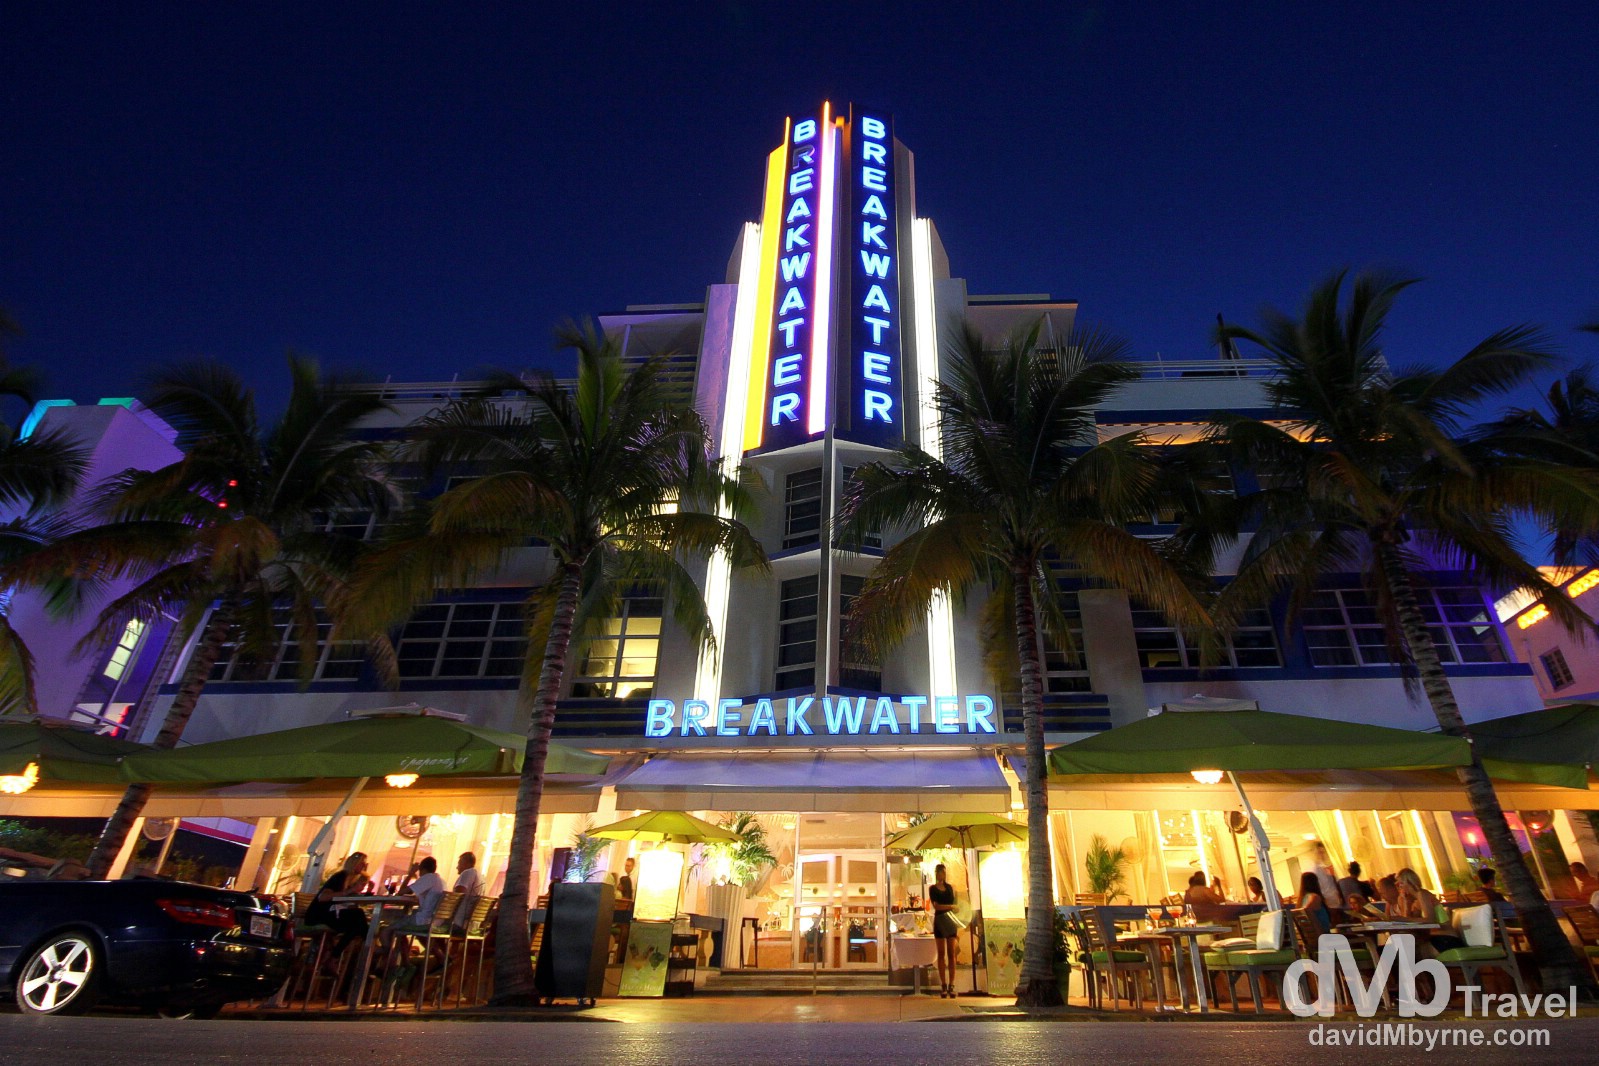 The Breakwater Hotel, Ocean Drive, Miami, Florida, USA. July 8th 2013. 